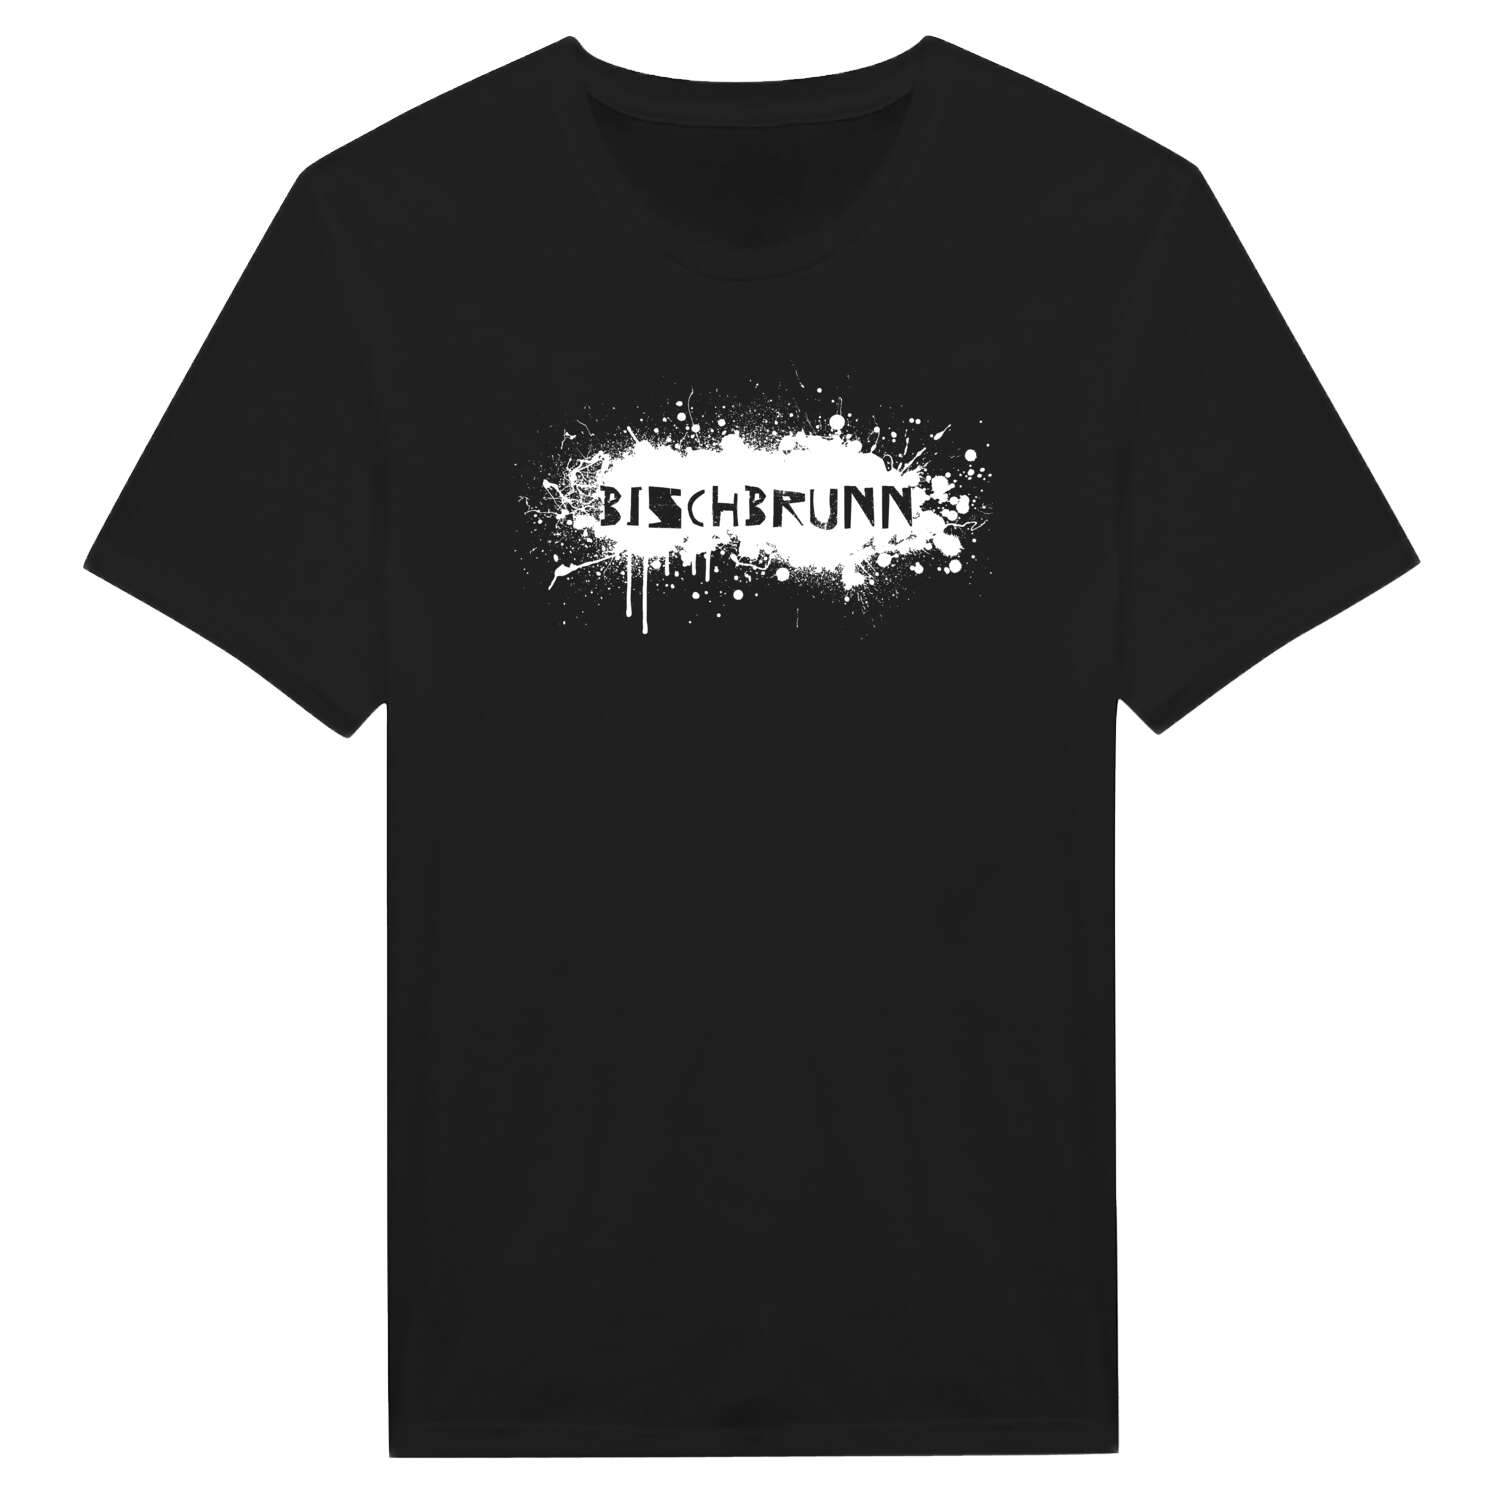 Bischbrunn T-Shirt »Paint Splash Punk«